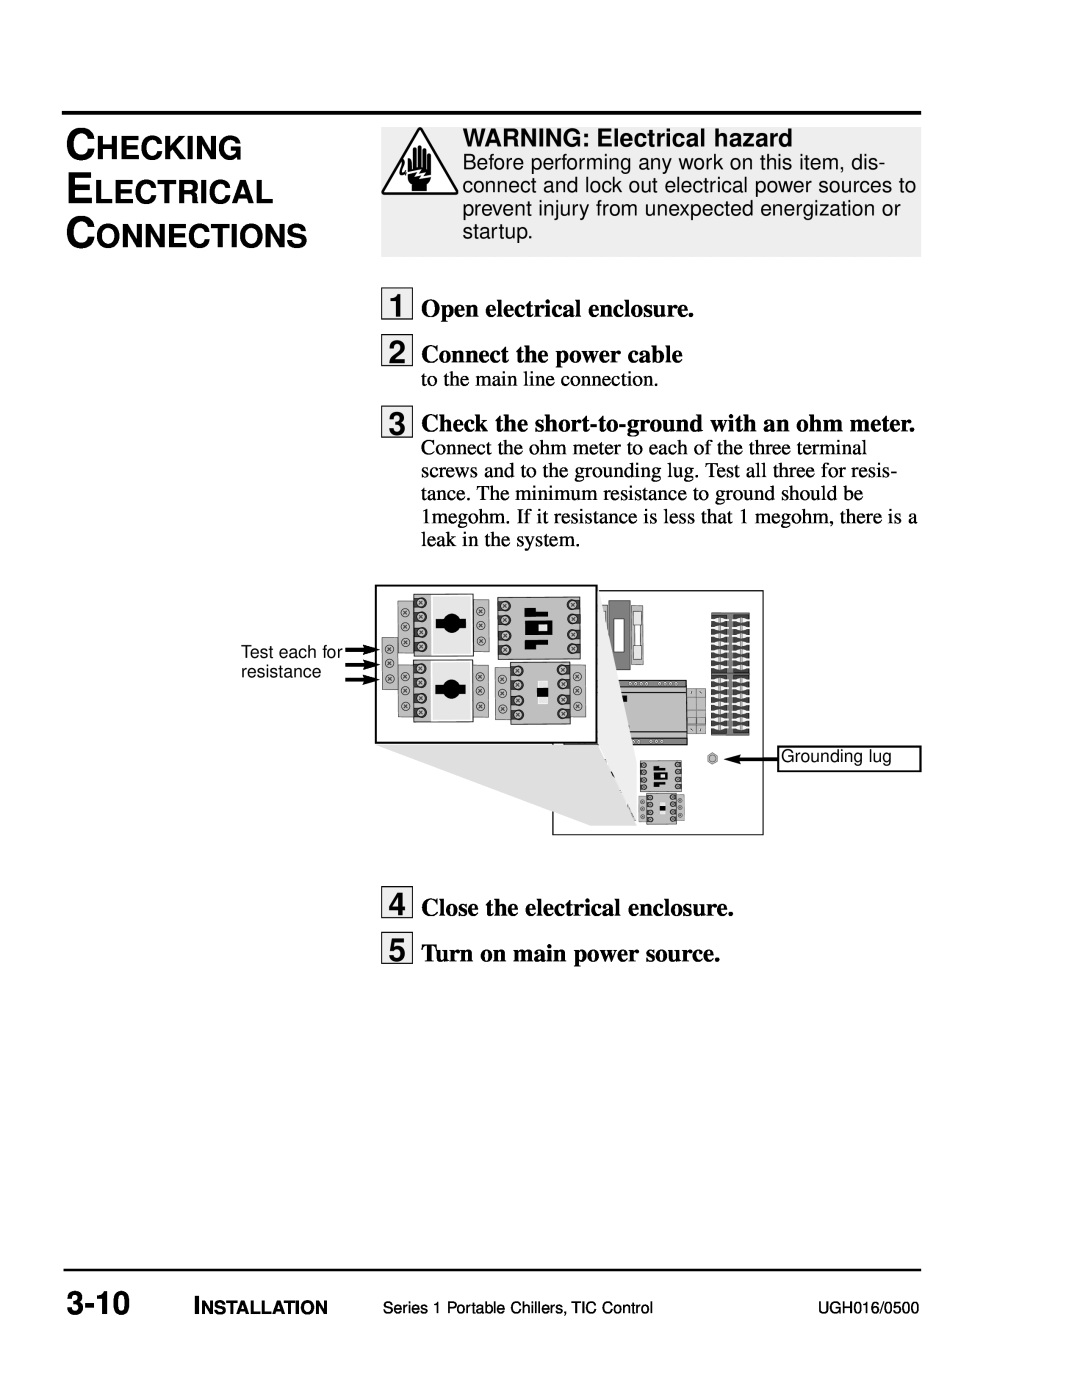 Conair UGH016/0500 manual Checking Electrical Connections, 3-10, WARNING Electrical hazard, Open electrical enclosure 